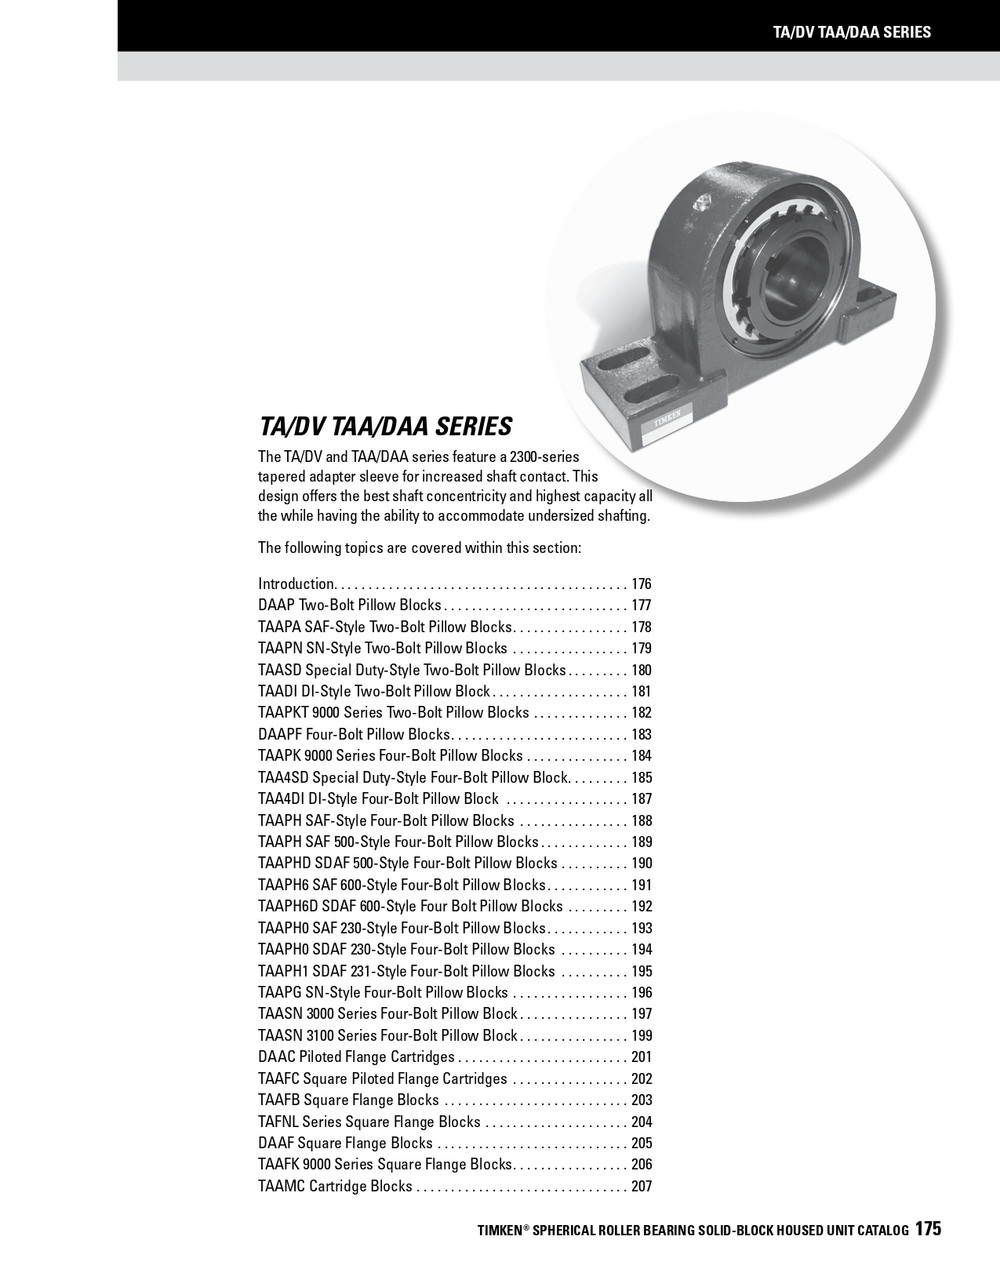 3-15/16" Timken TA Replacement Bearing & Seal Kit - Taper Lock Adapter - Triple Lip Viton Seals  TA315KITSN